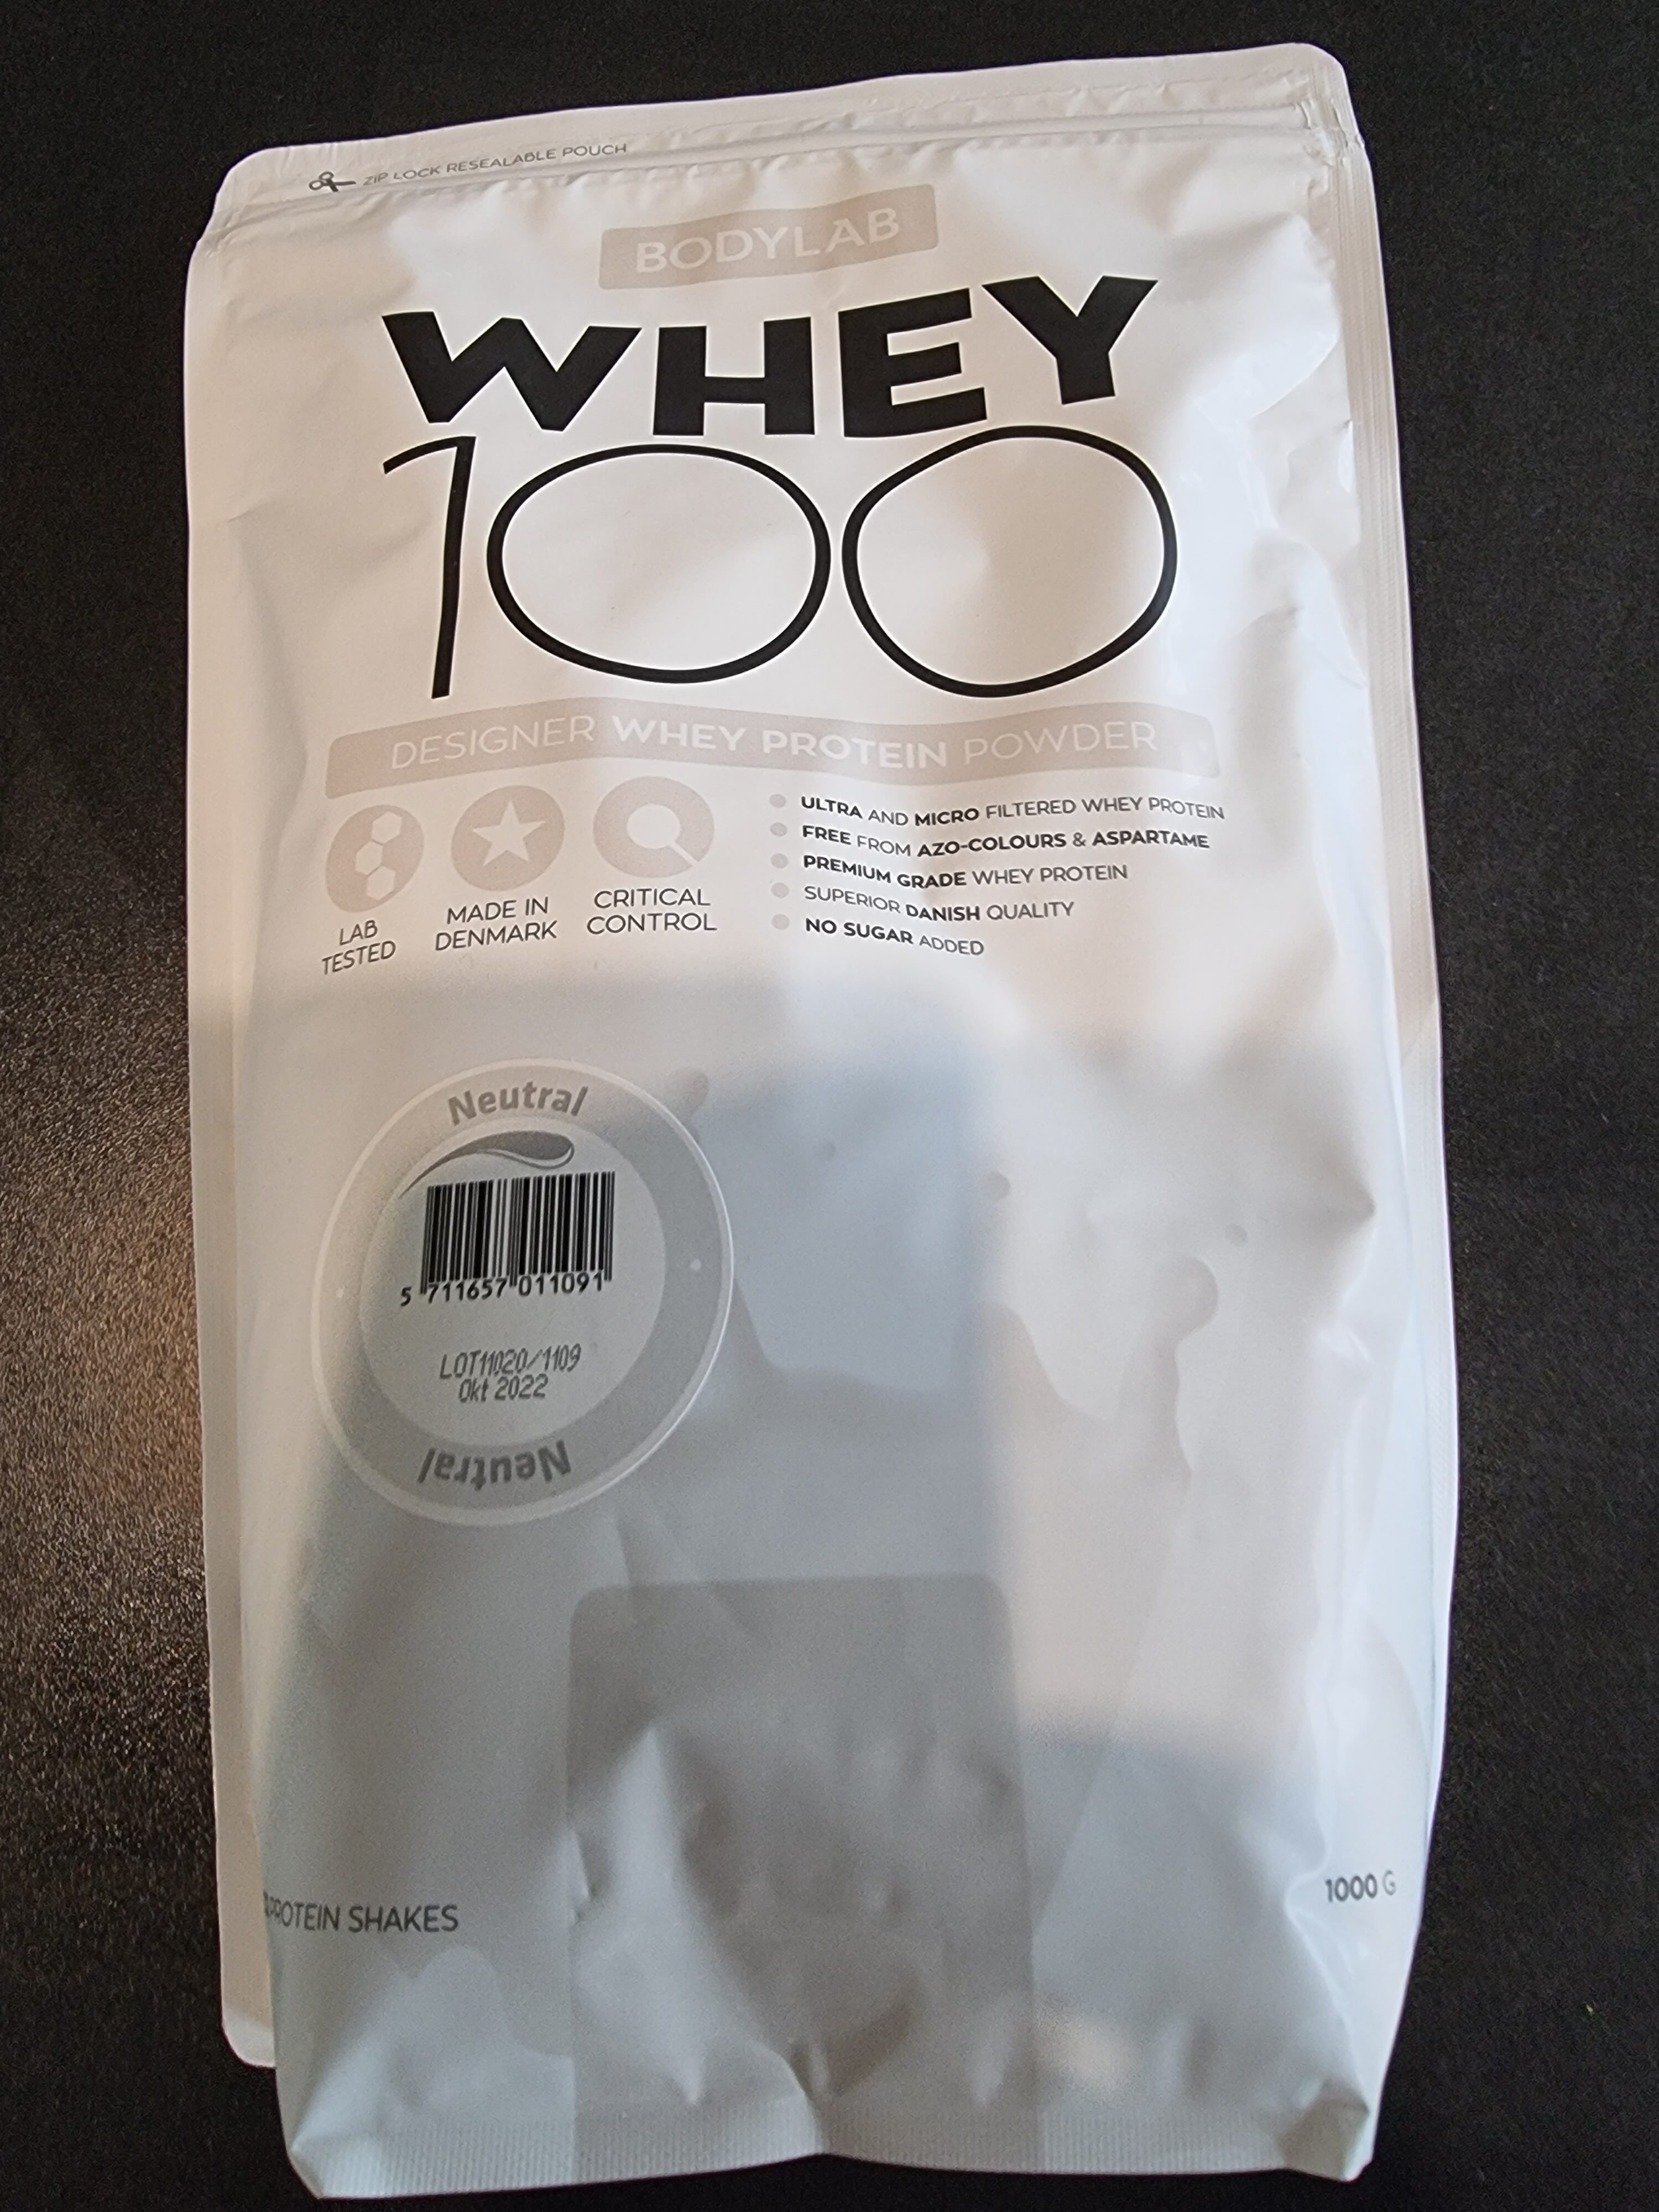 Bodylab Whey 100 Neutral - Produkt - en